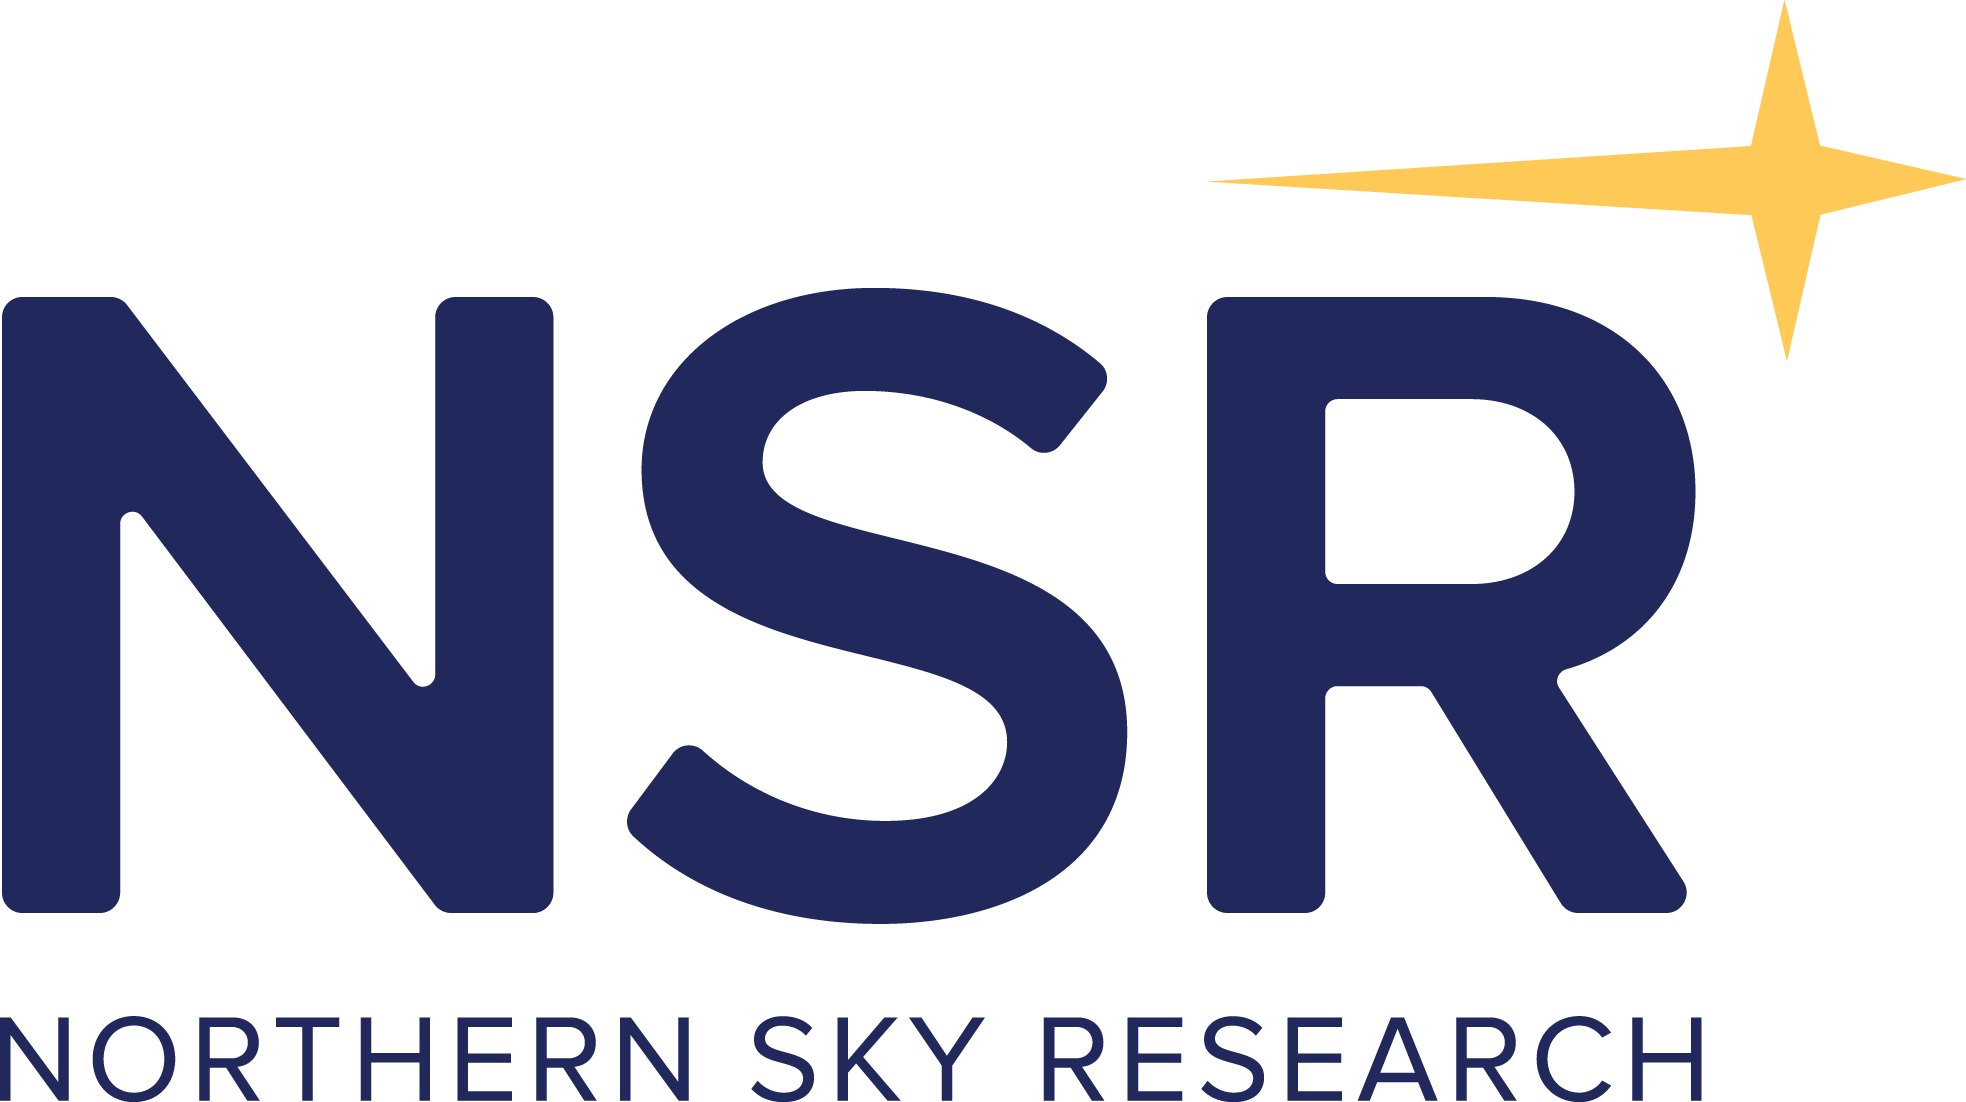 Northern Sky Research Nsr 2019 Satellite Innovation 